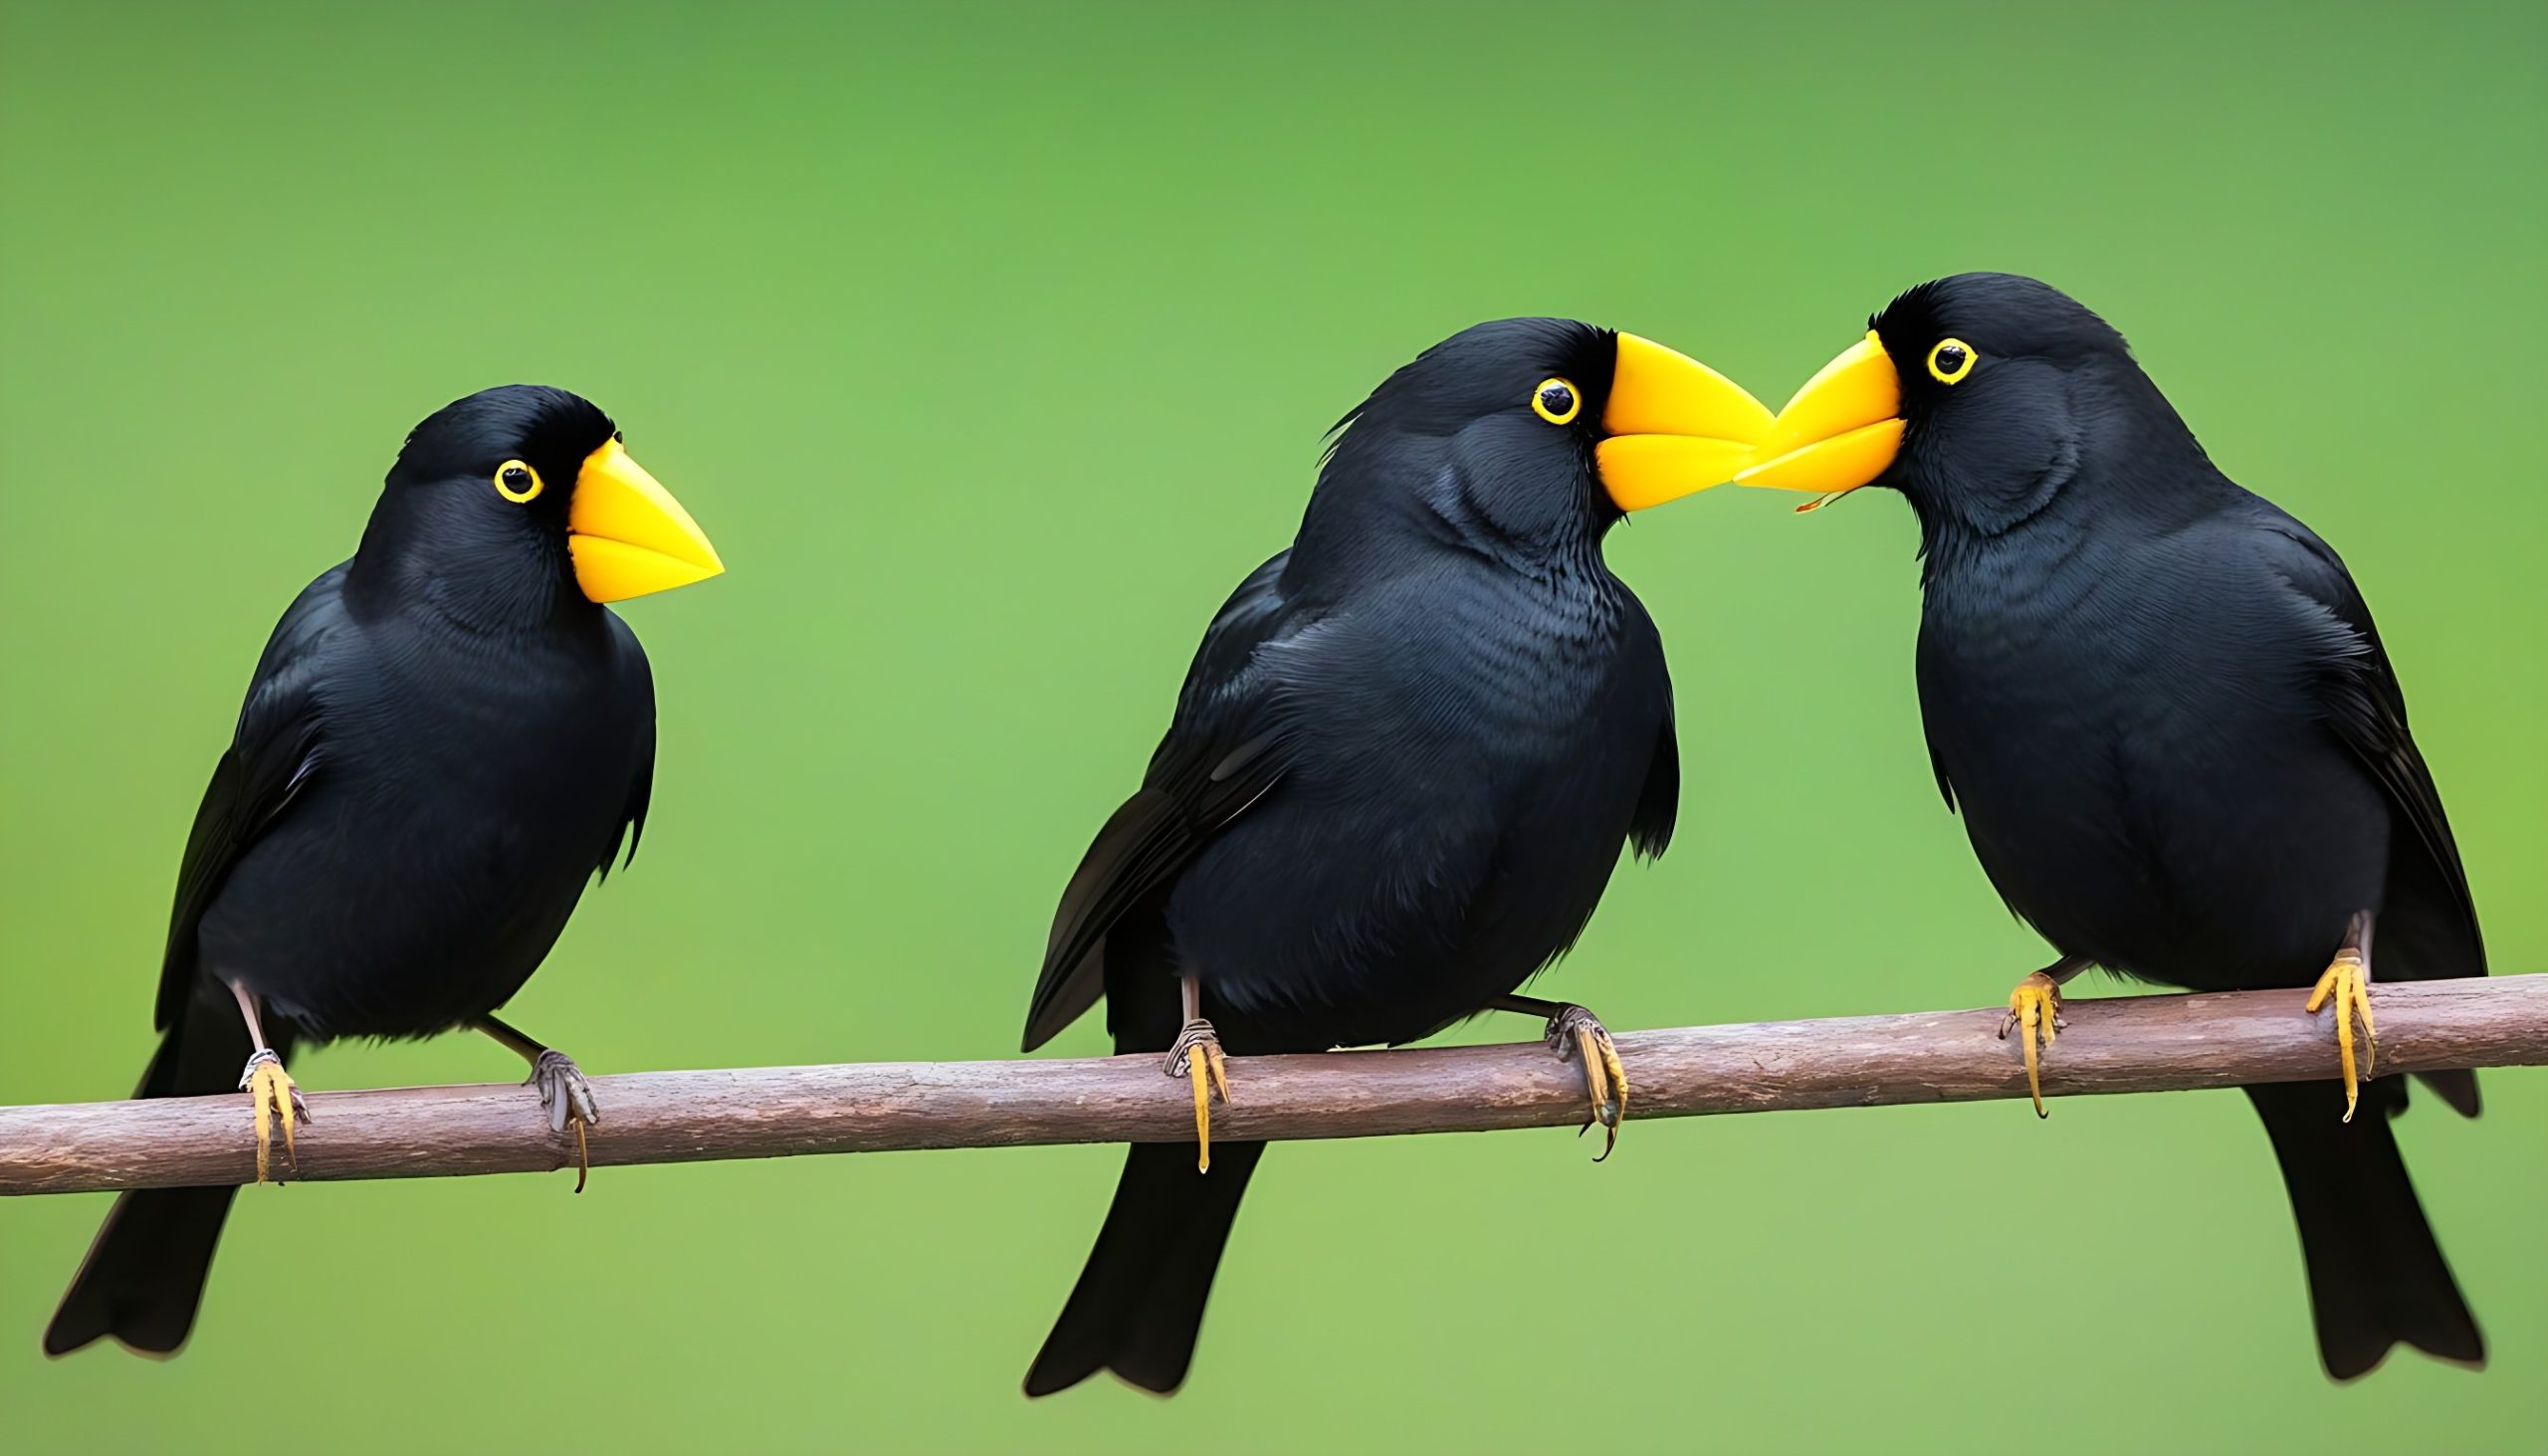 large black bird with yellow beak